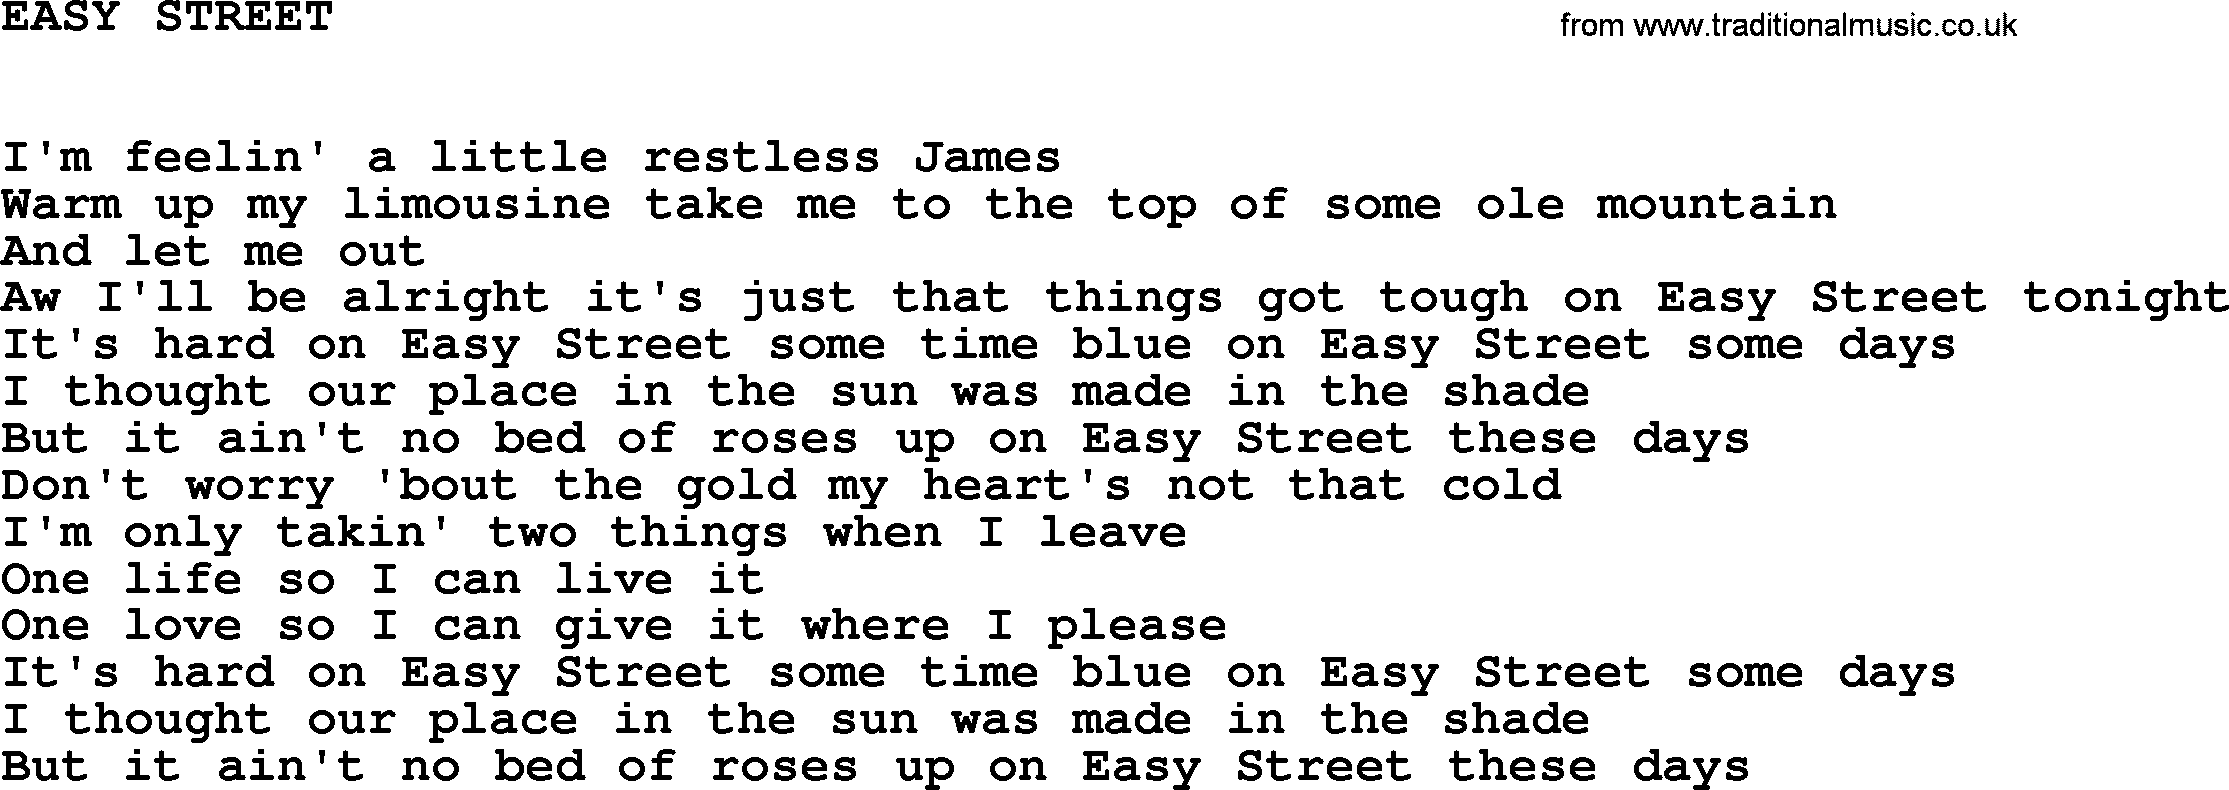 Johnny Cash song Easy Street.txt lyrics